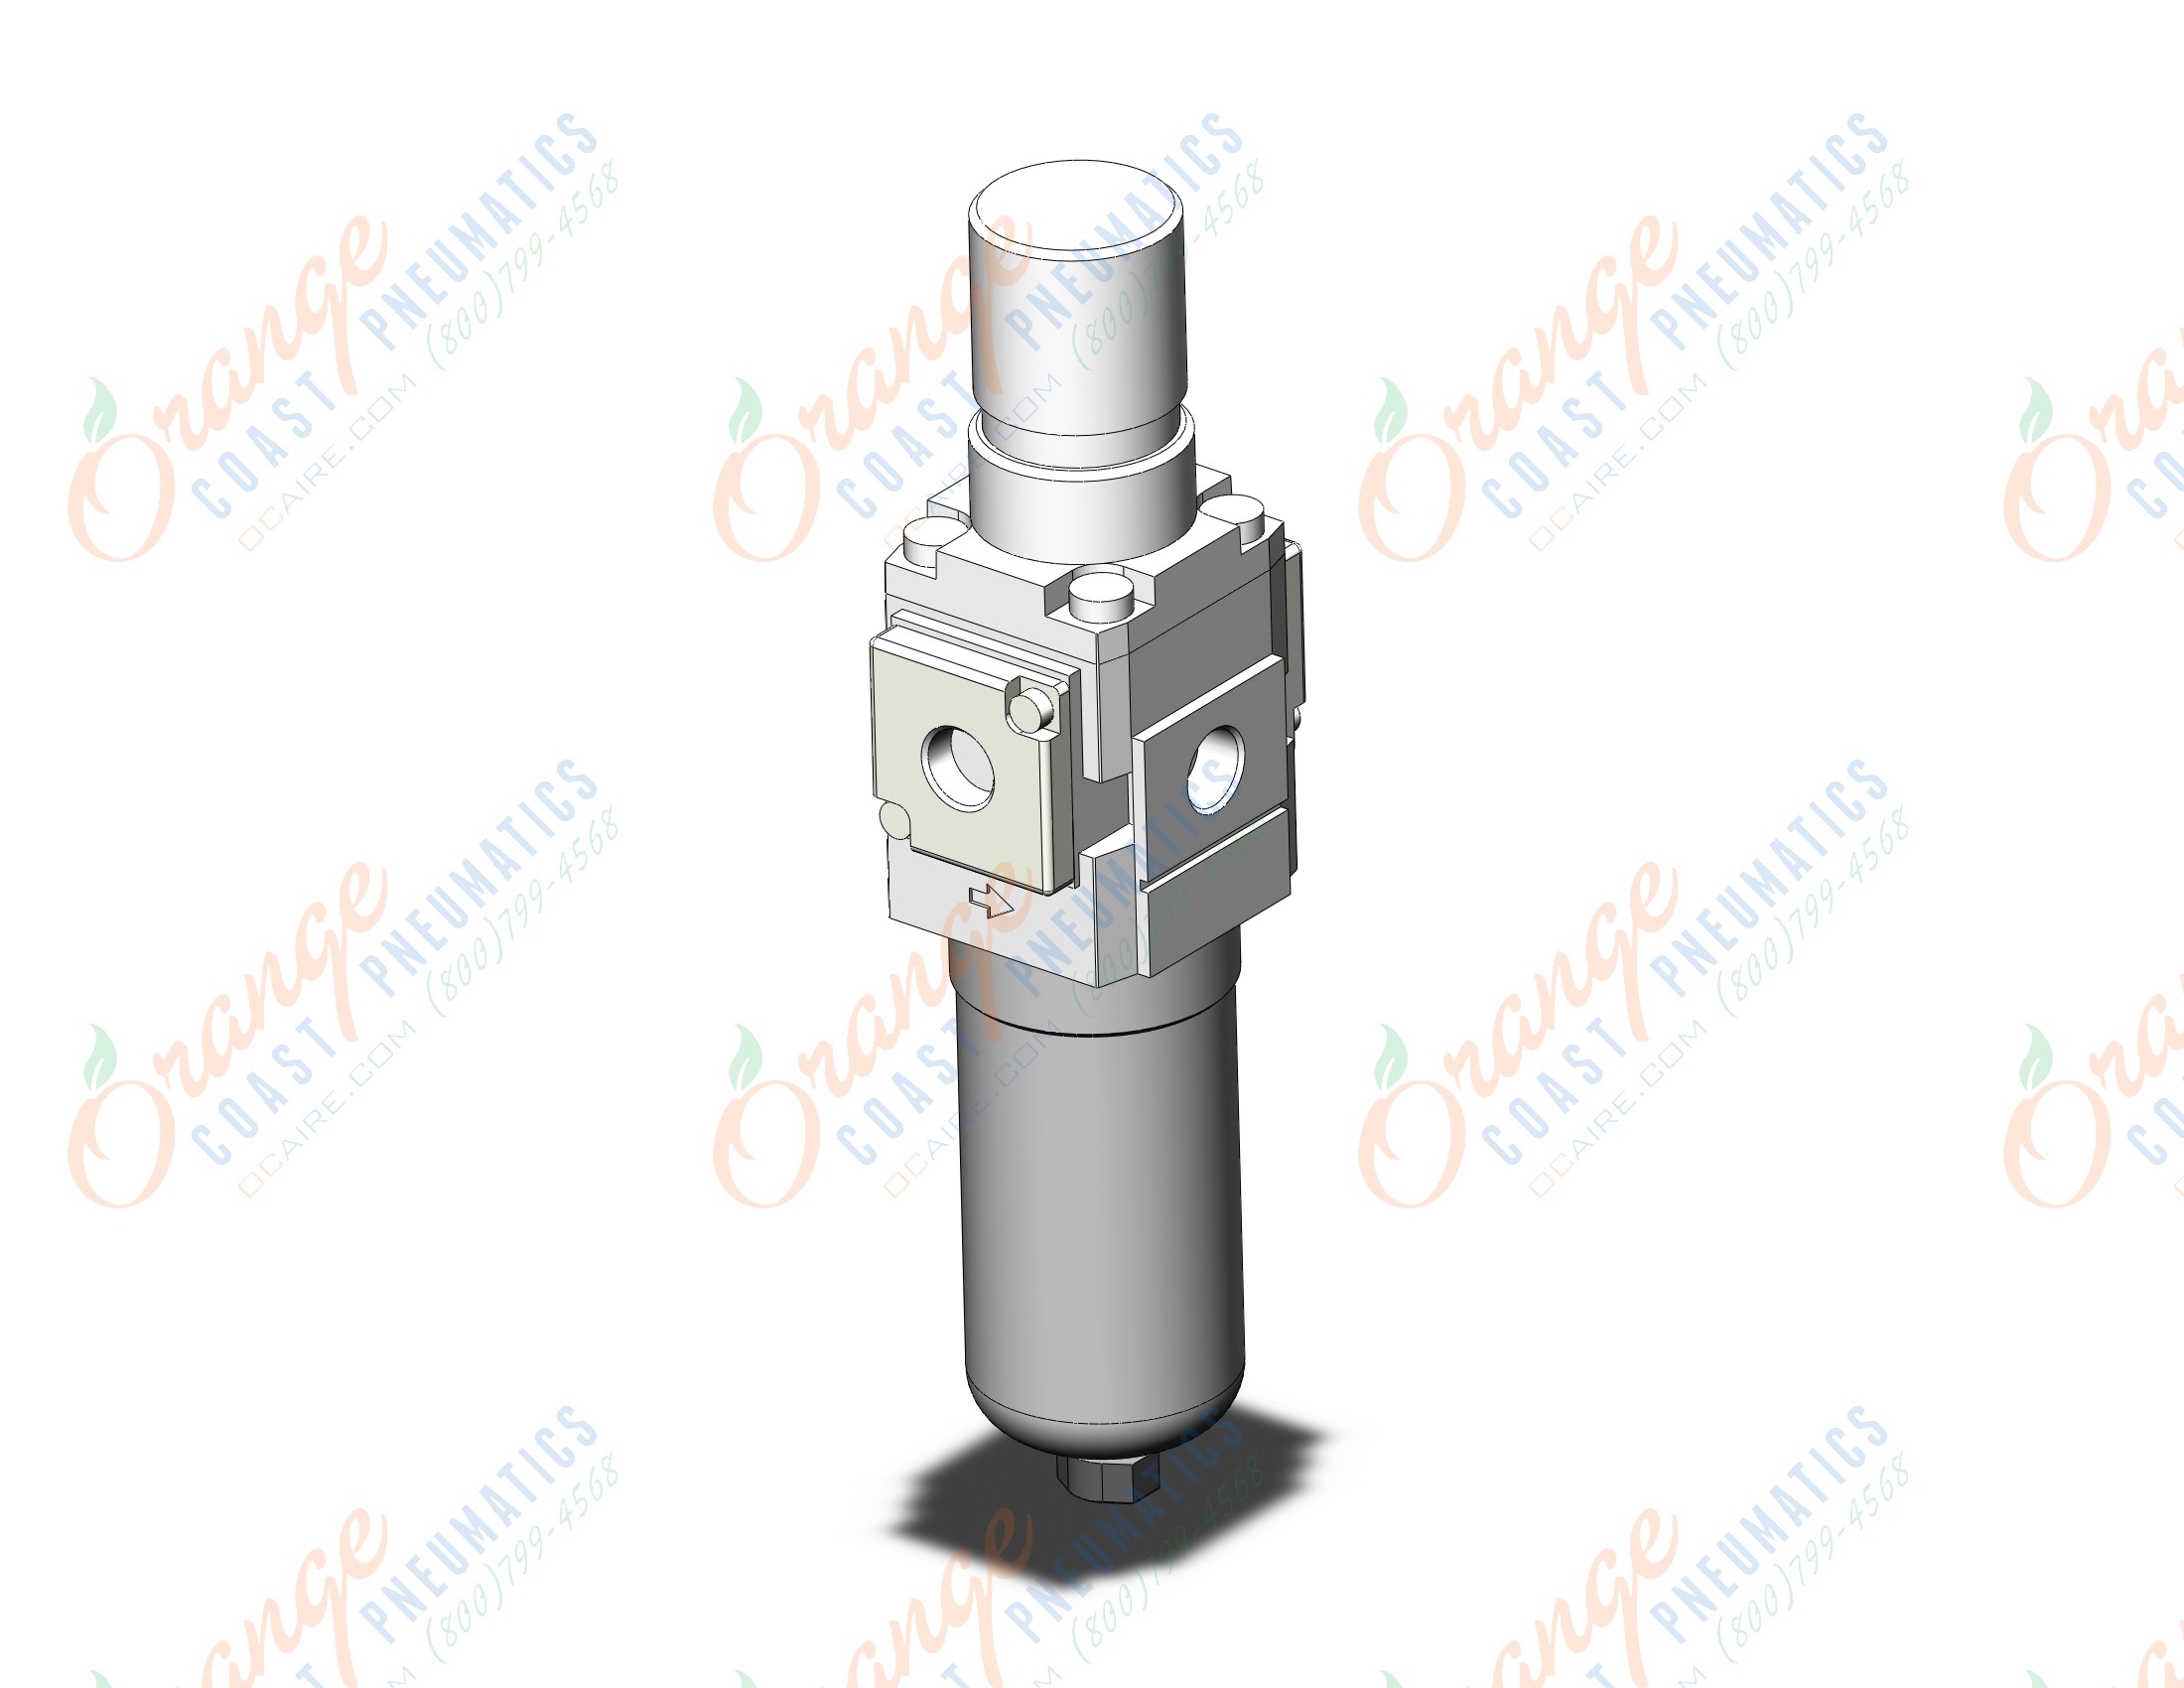 SMC AW20K-N01C-1Z-B filter/regulator, FILTER/REGULATOR, MODULAR F.R.L.